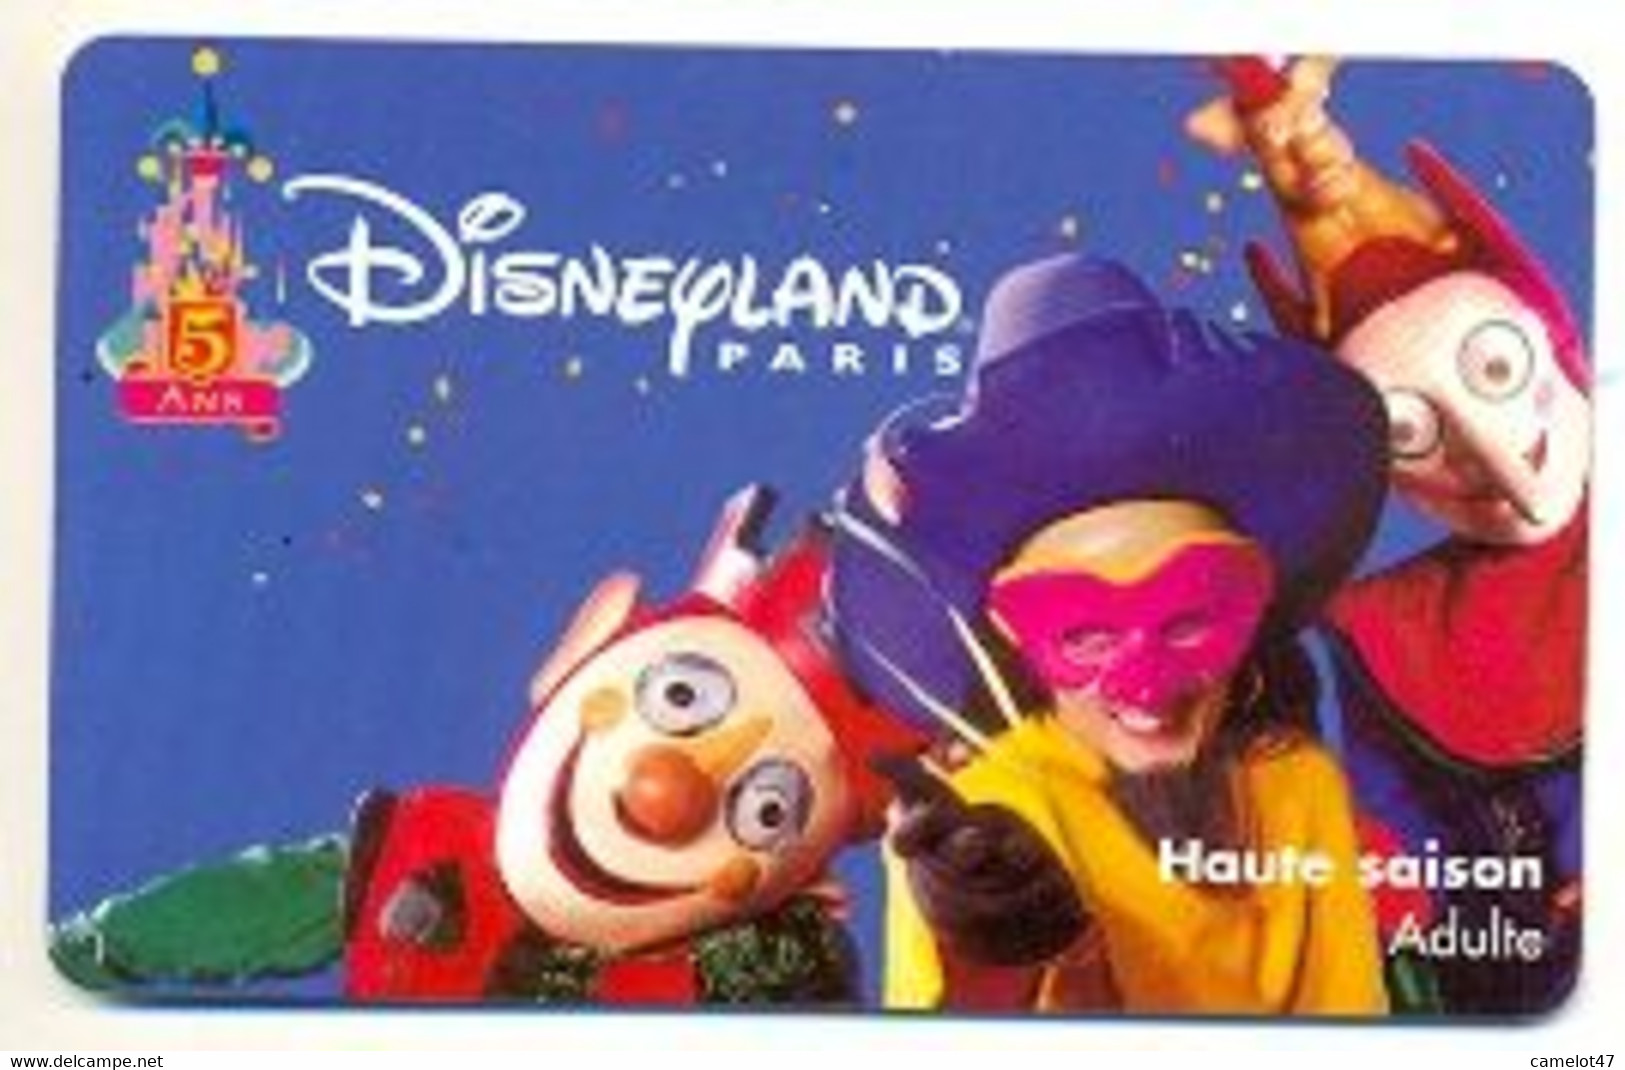 Disneyland Paris Ticket, Usagé, Used Condition. # Dtp-6 - Toegangsticket Disney